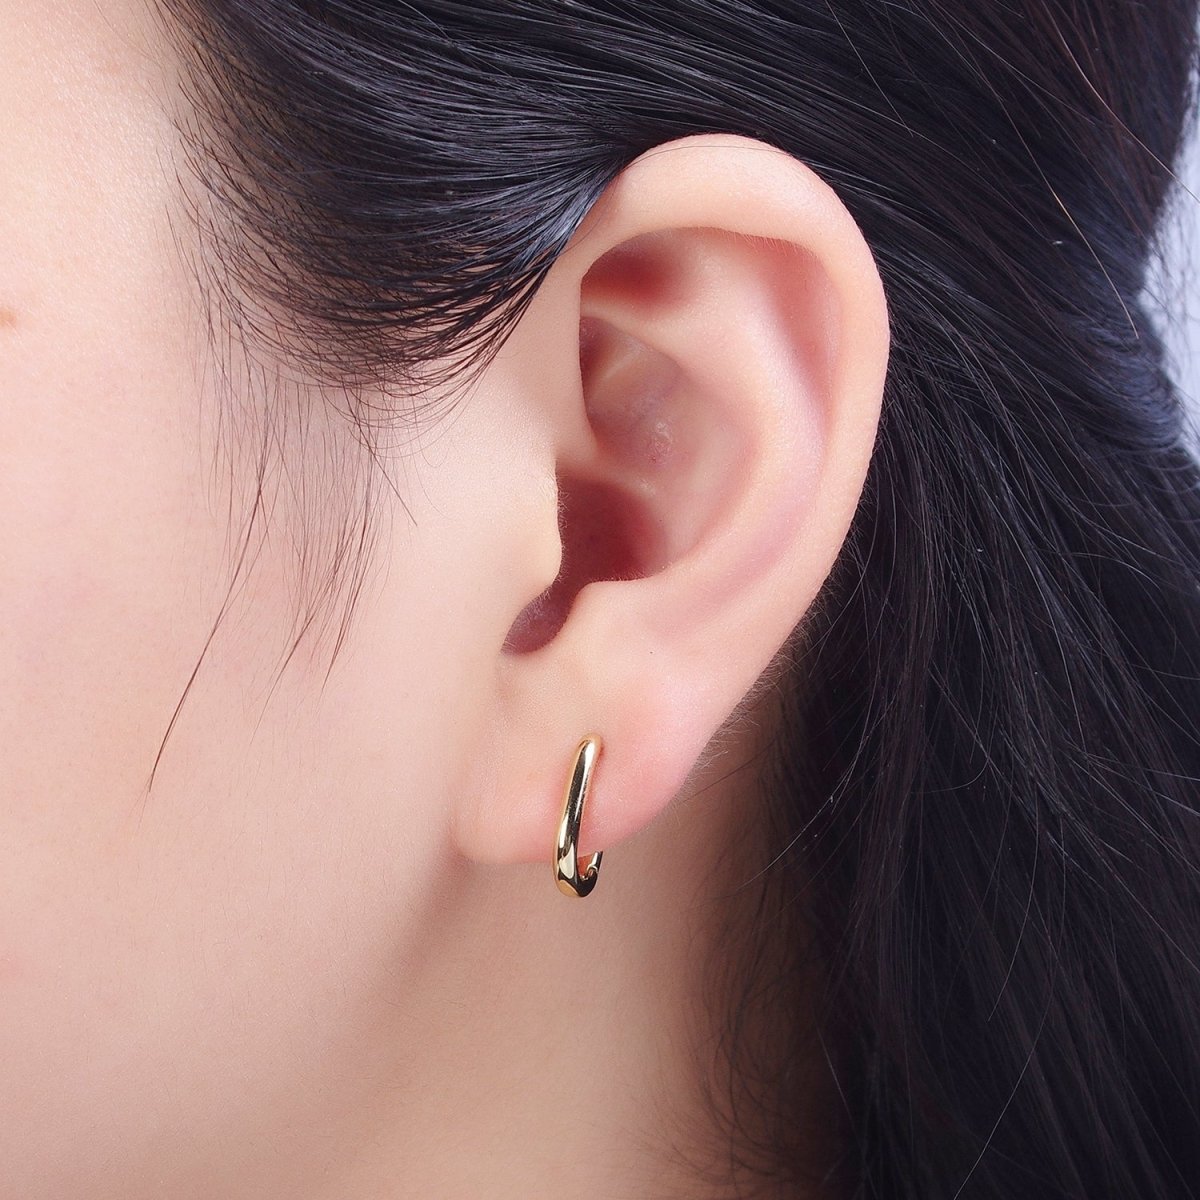 14K Gold Filled Minimalist Earring U Shape Small Hoop Huggie Earring, Perfect for Everyday Wear or Gift | X-909 - DLUXCA